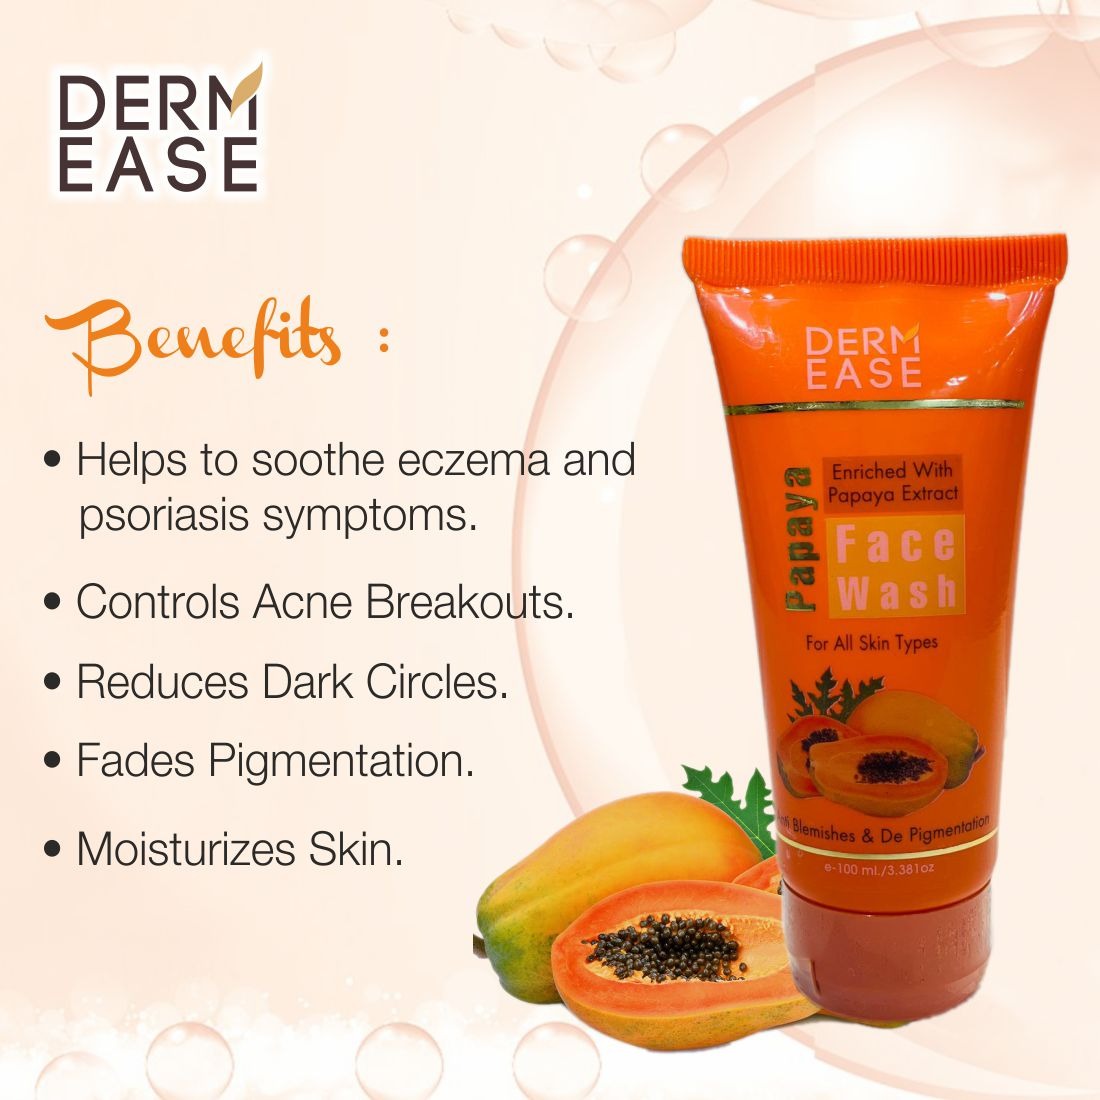 DERM EASE Papaya & Charcoal Face Wash Combo